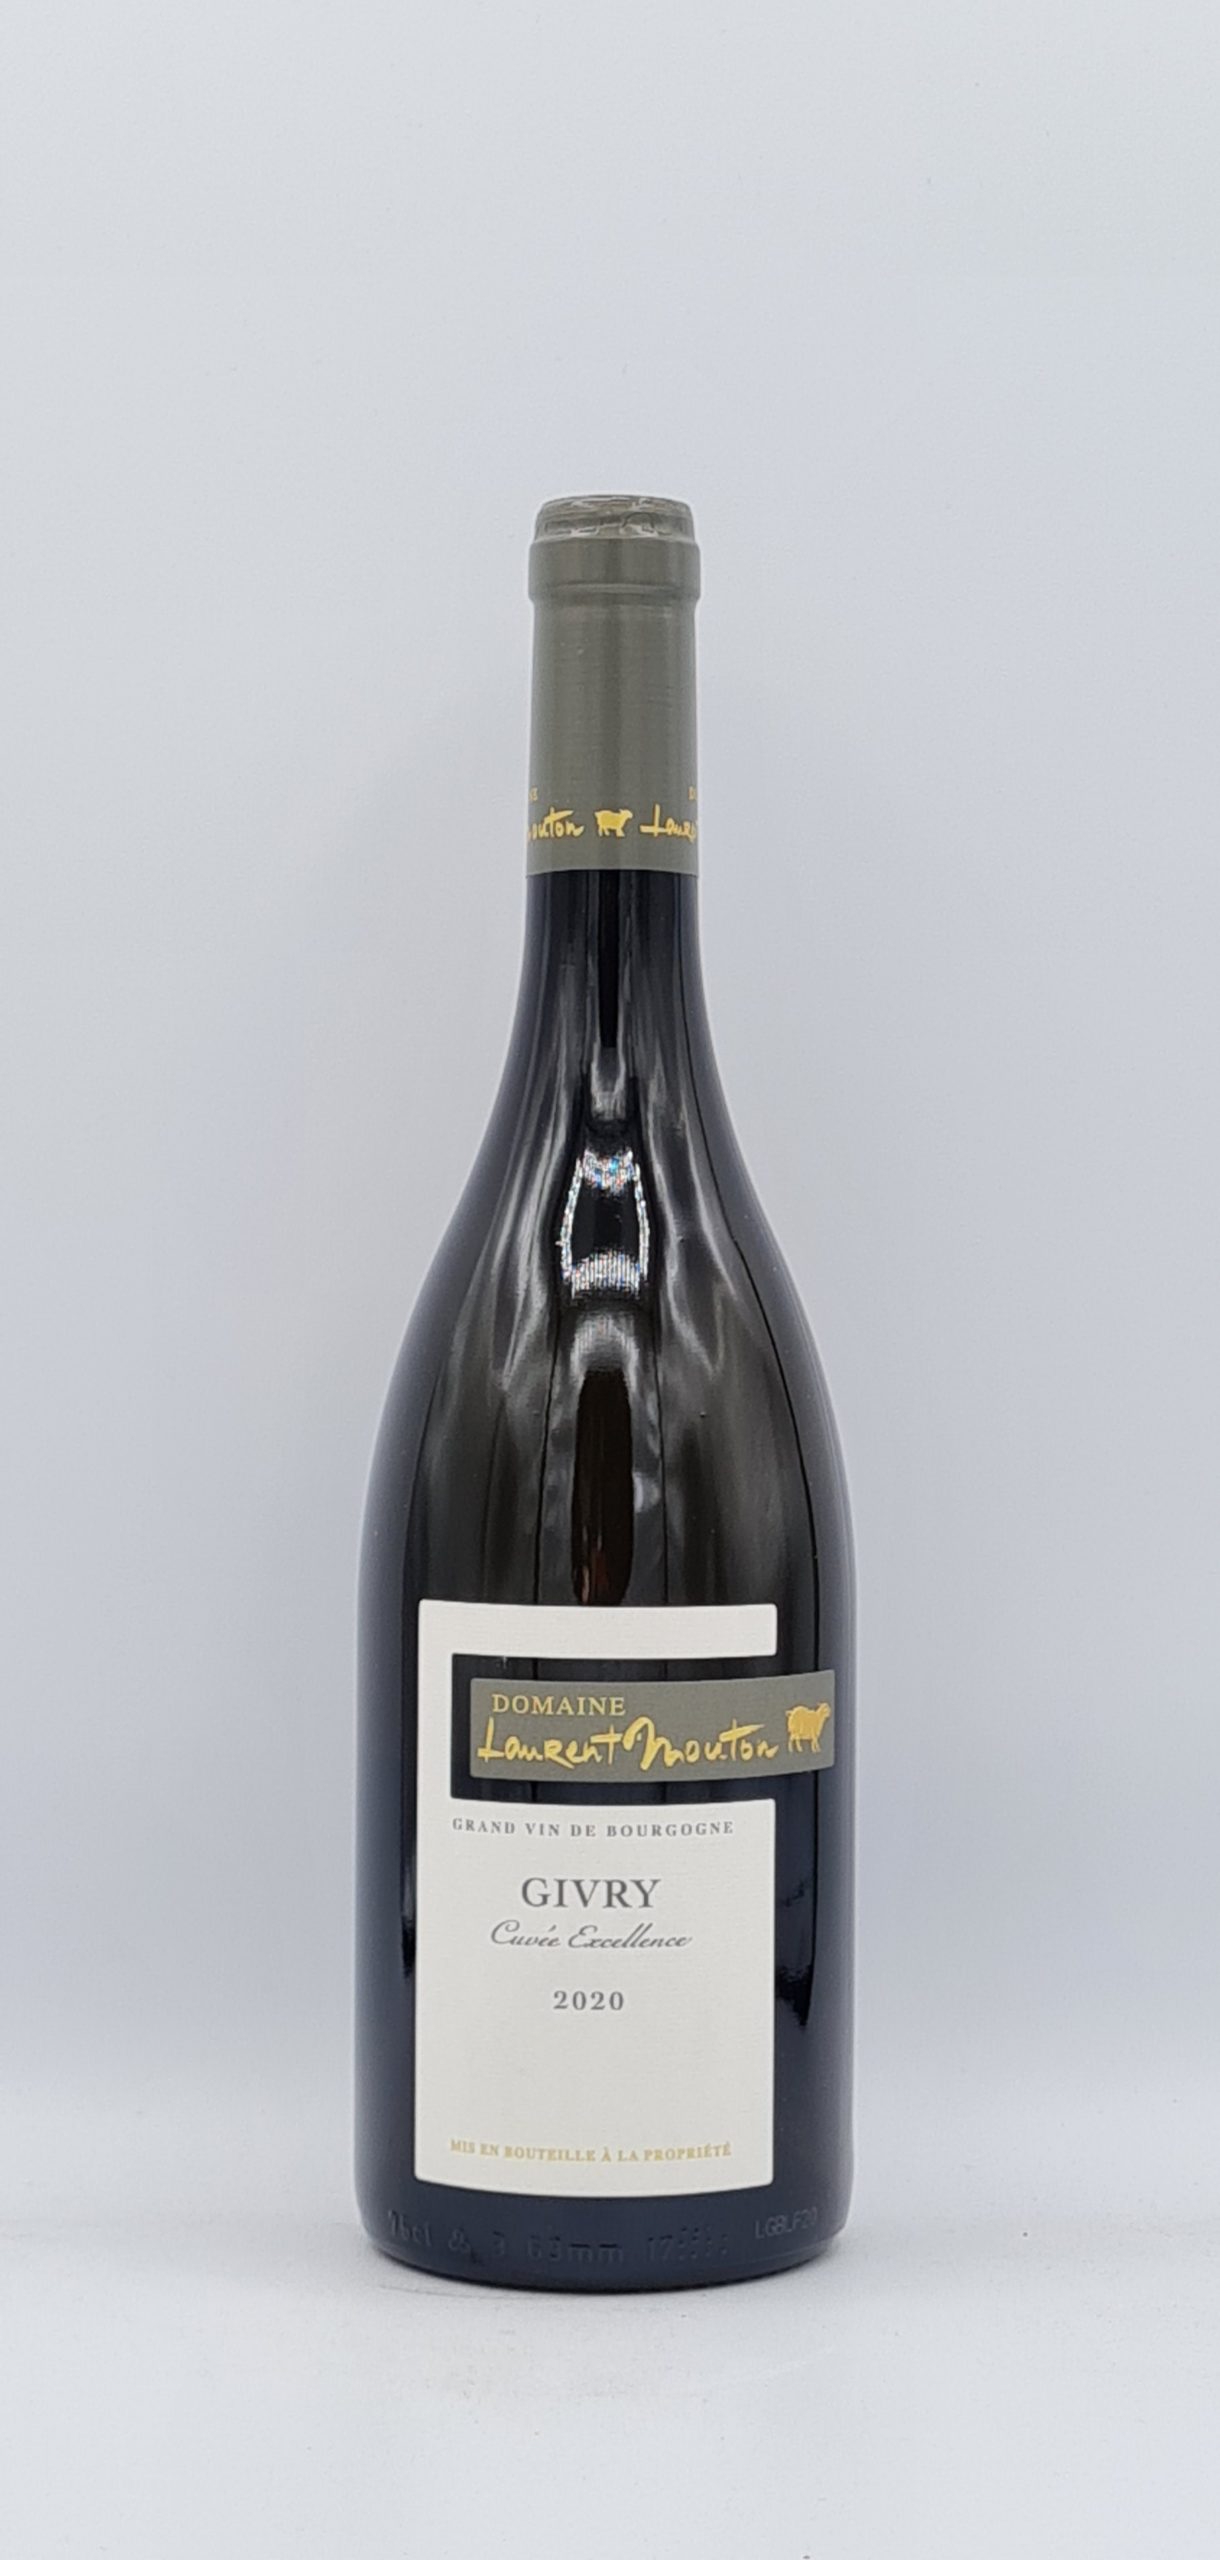 Bourgogne Givry “Cuvée excellence” 2020 Domaine Mouton